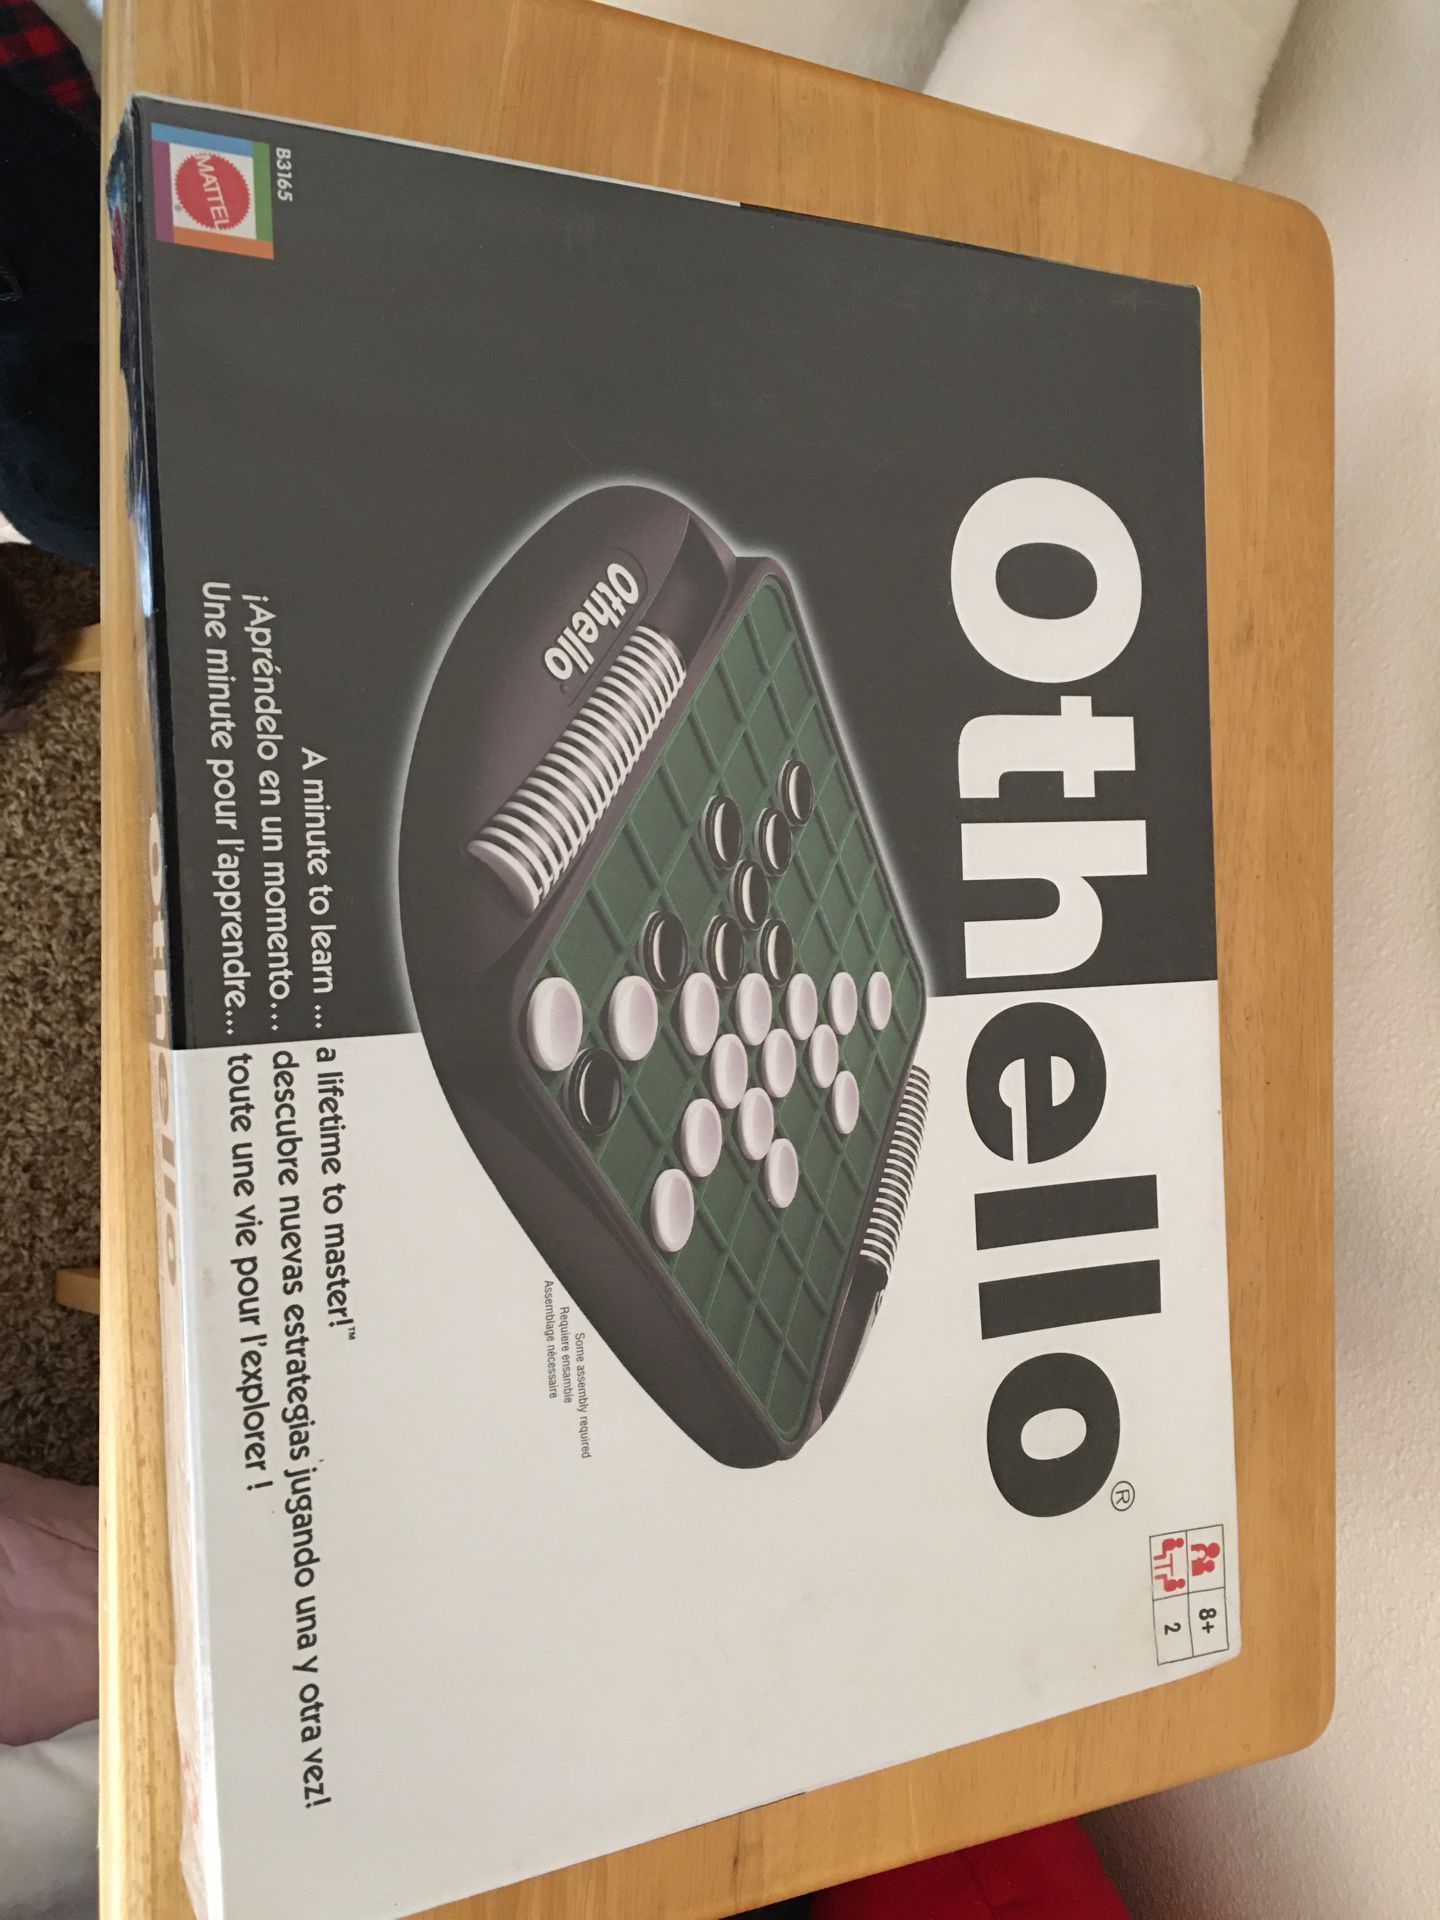 New Board Game “Othello”